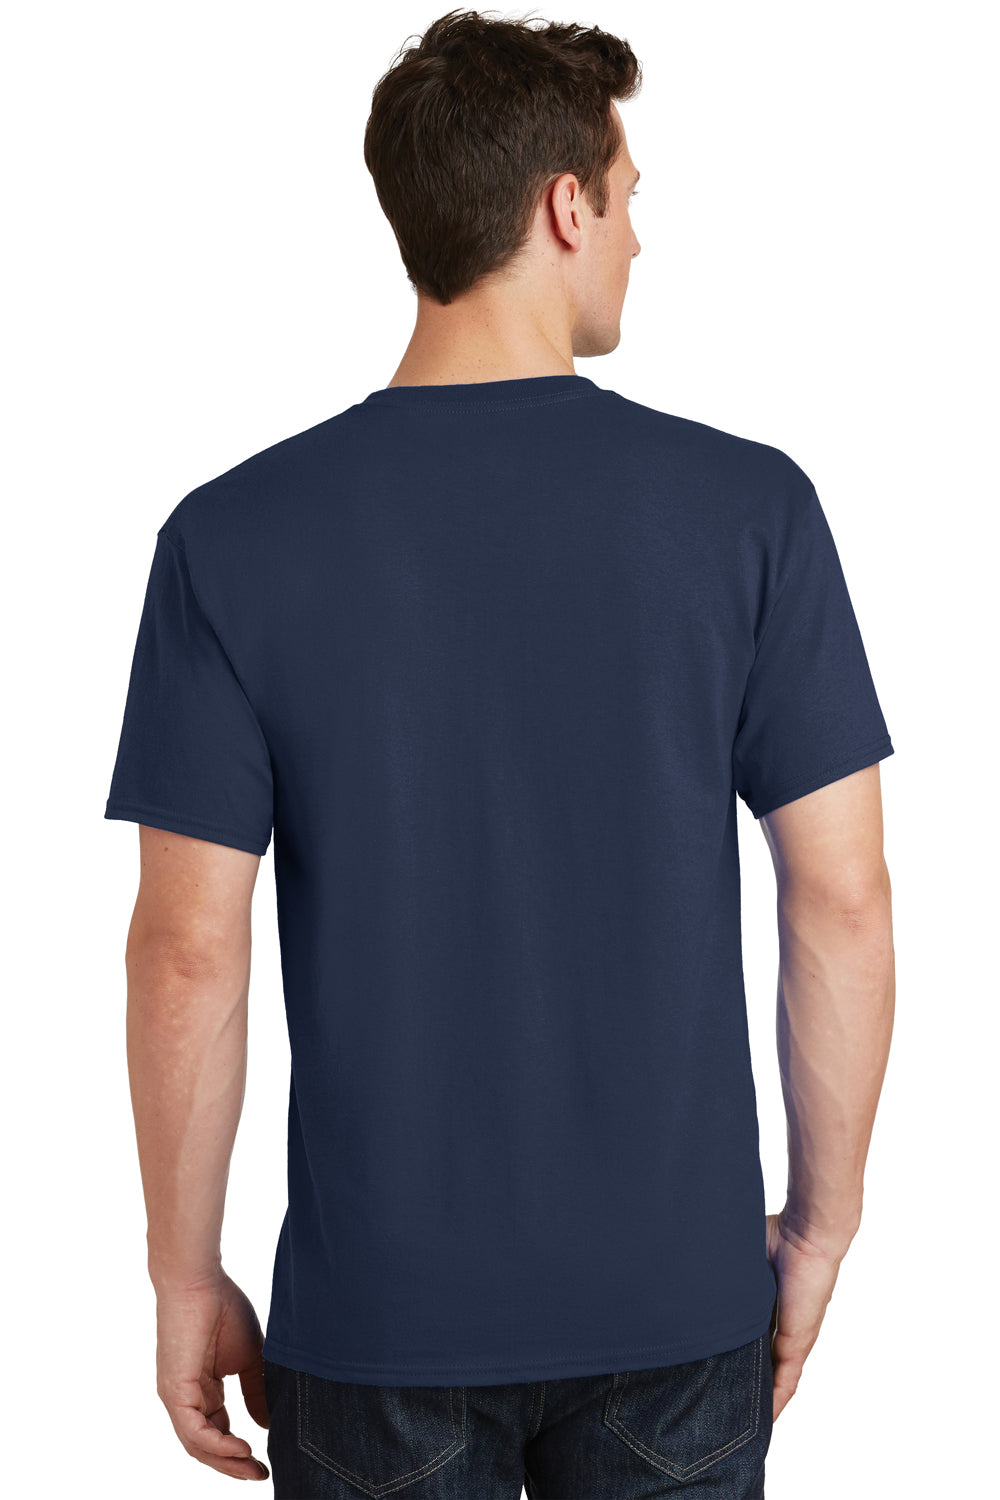 Port & Company PC54 Mens Core Short Sleeve Crewneck T-Shirt Navy Blue Back